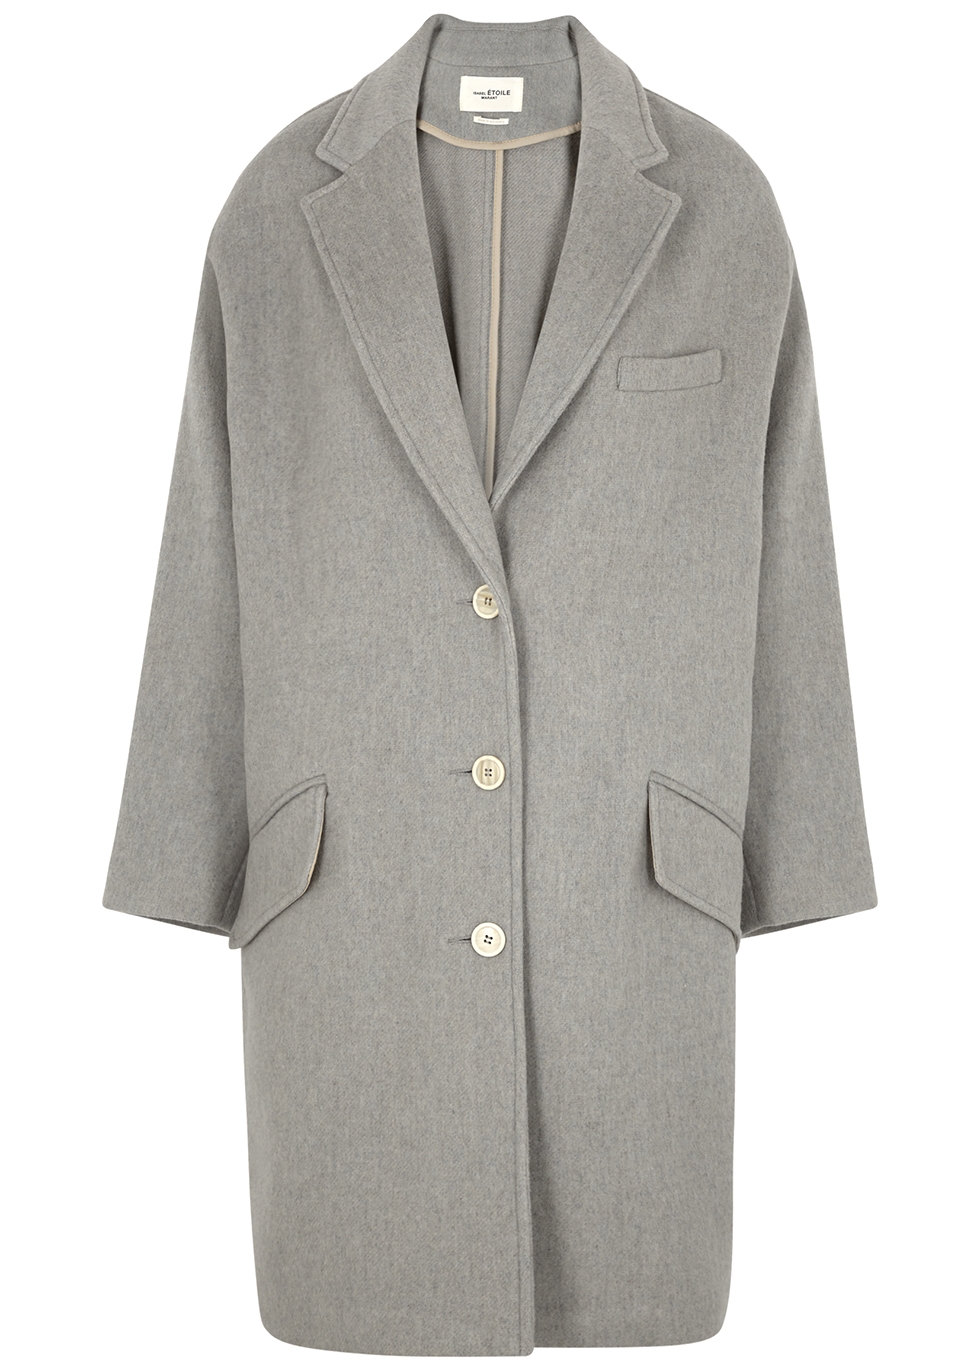 Limi grey wool-blend coat